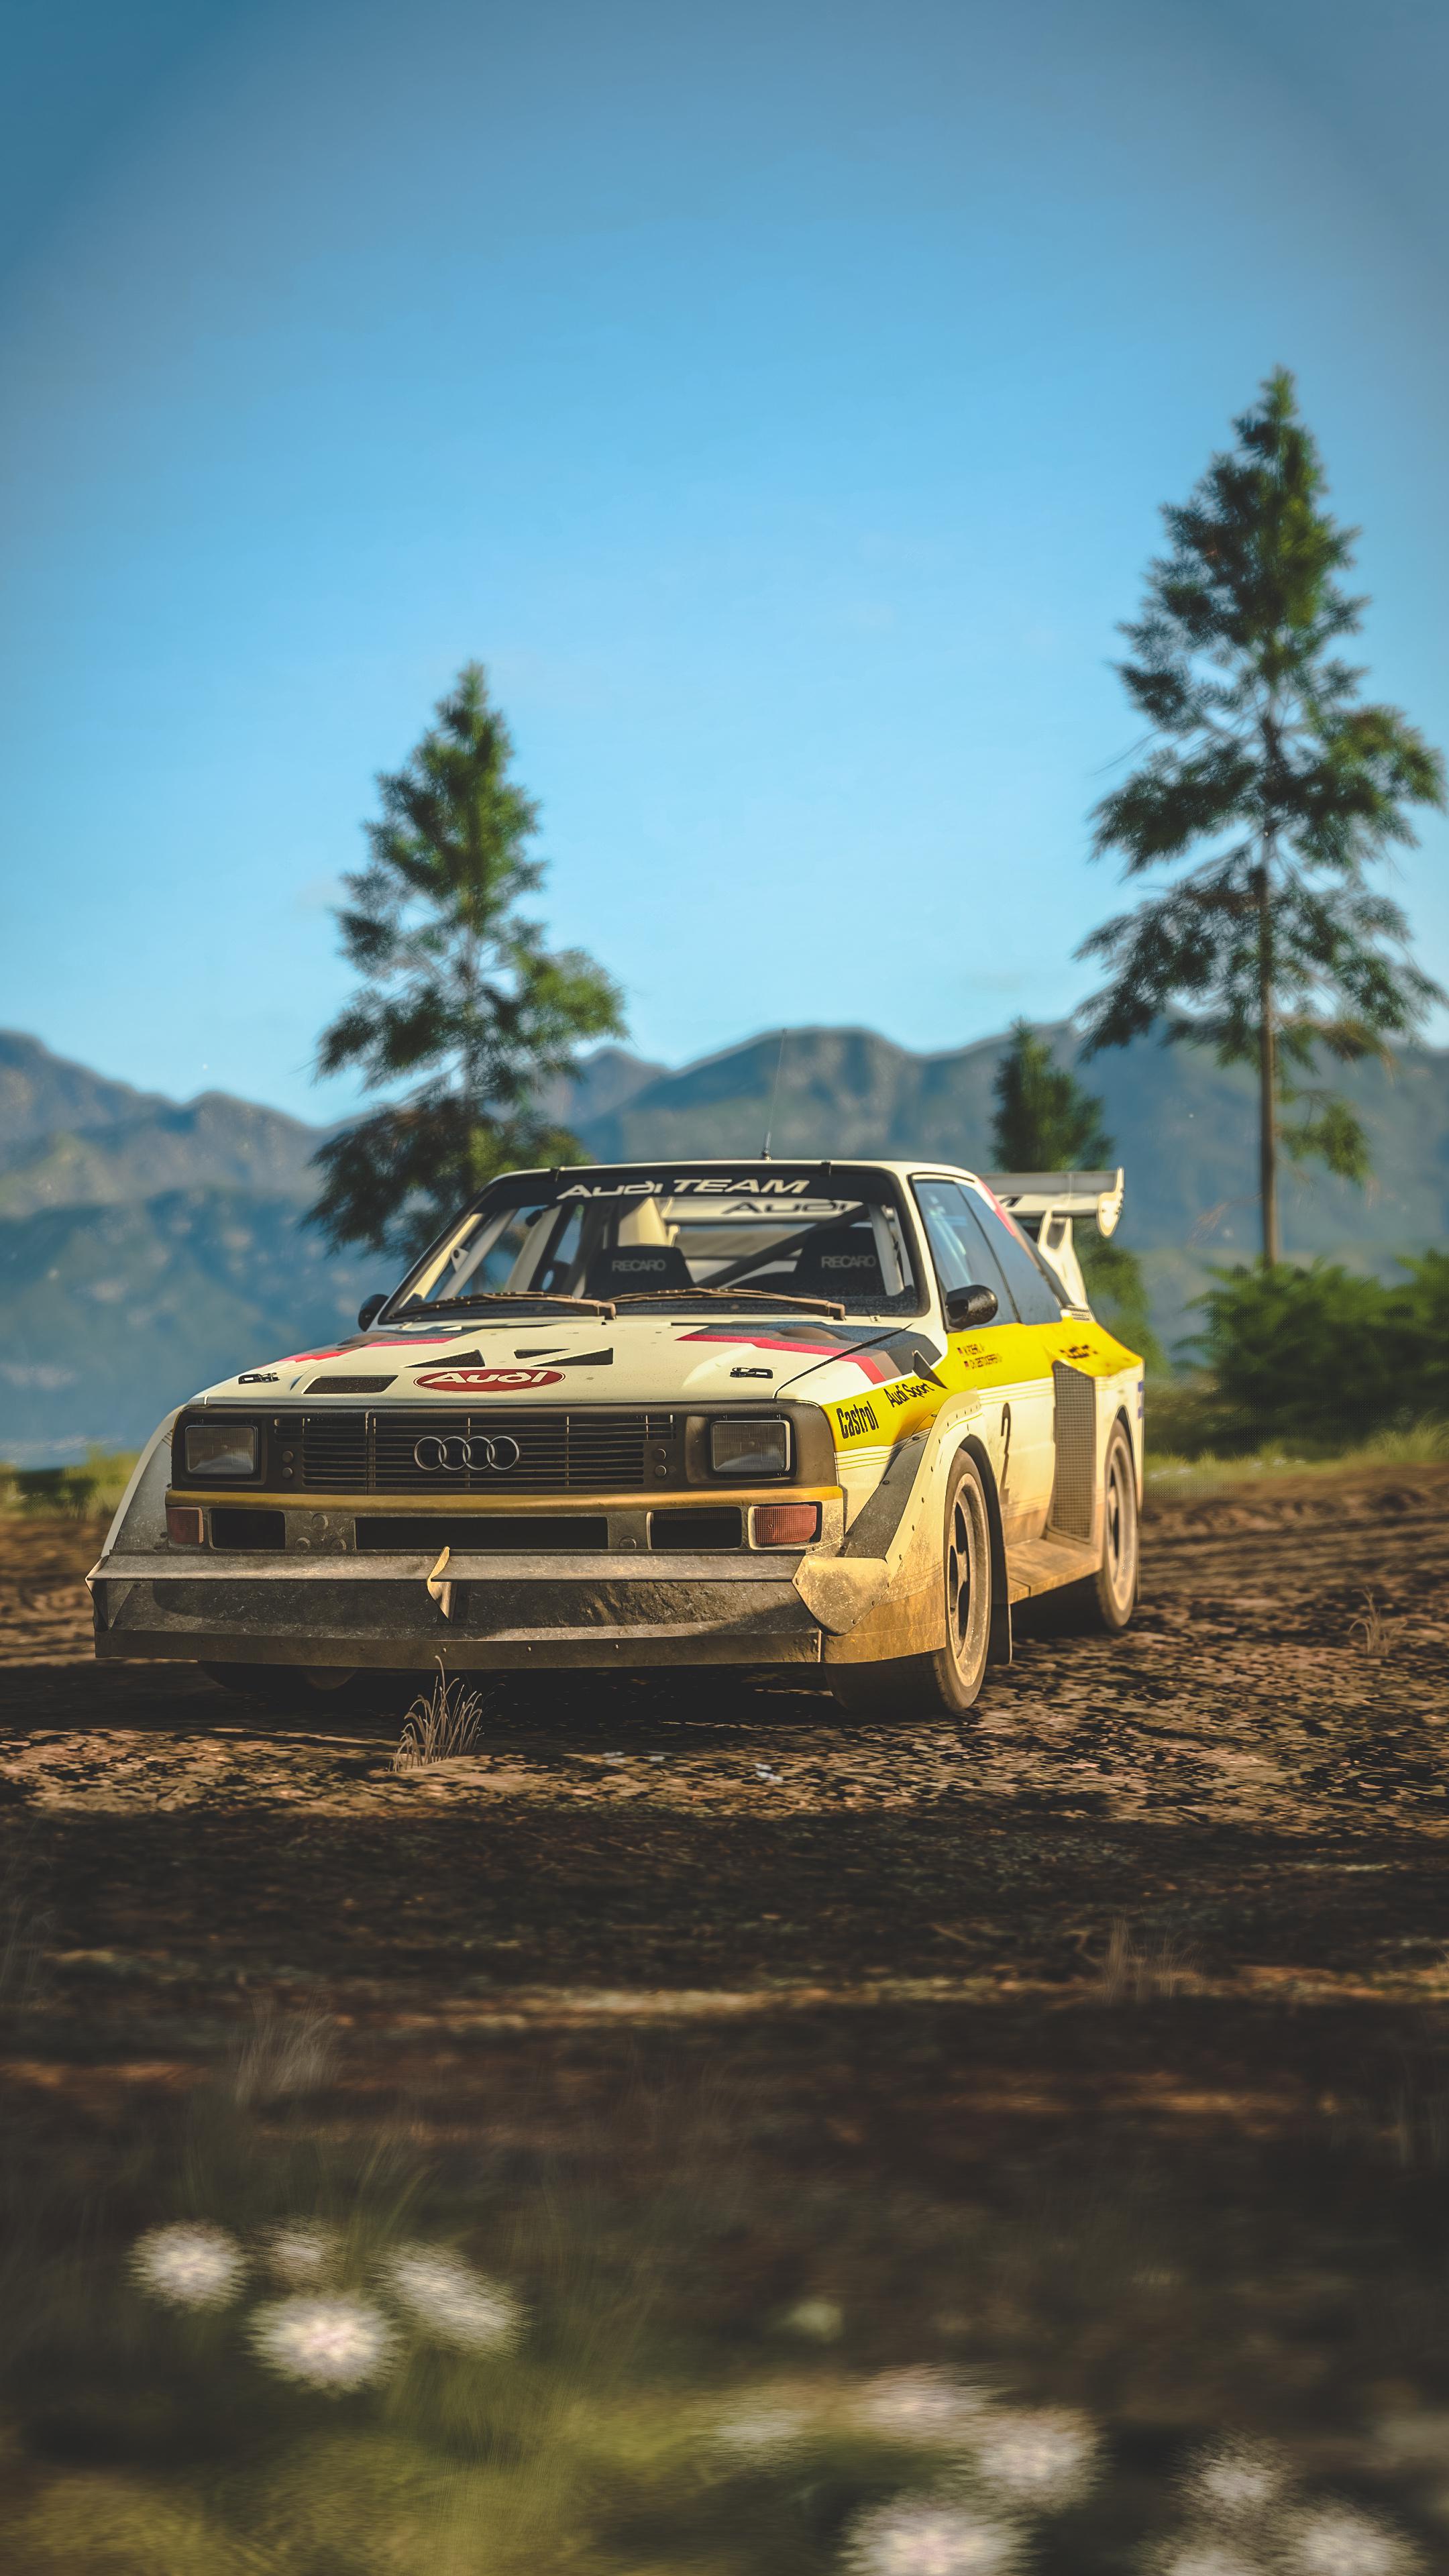 Audi sport quattro s rforzahorizon